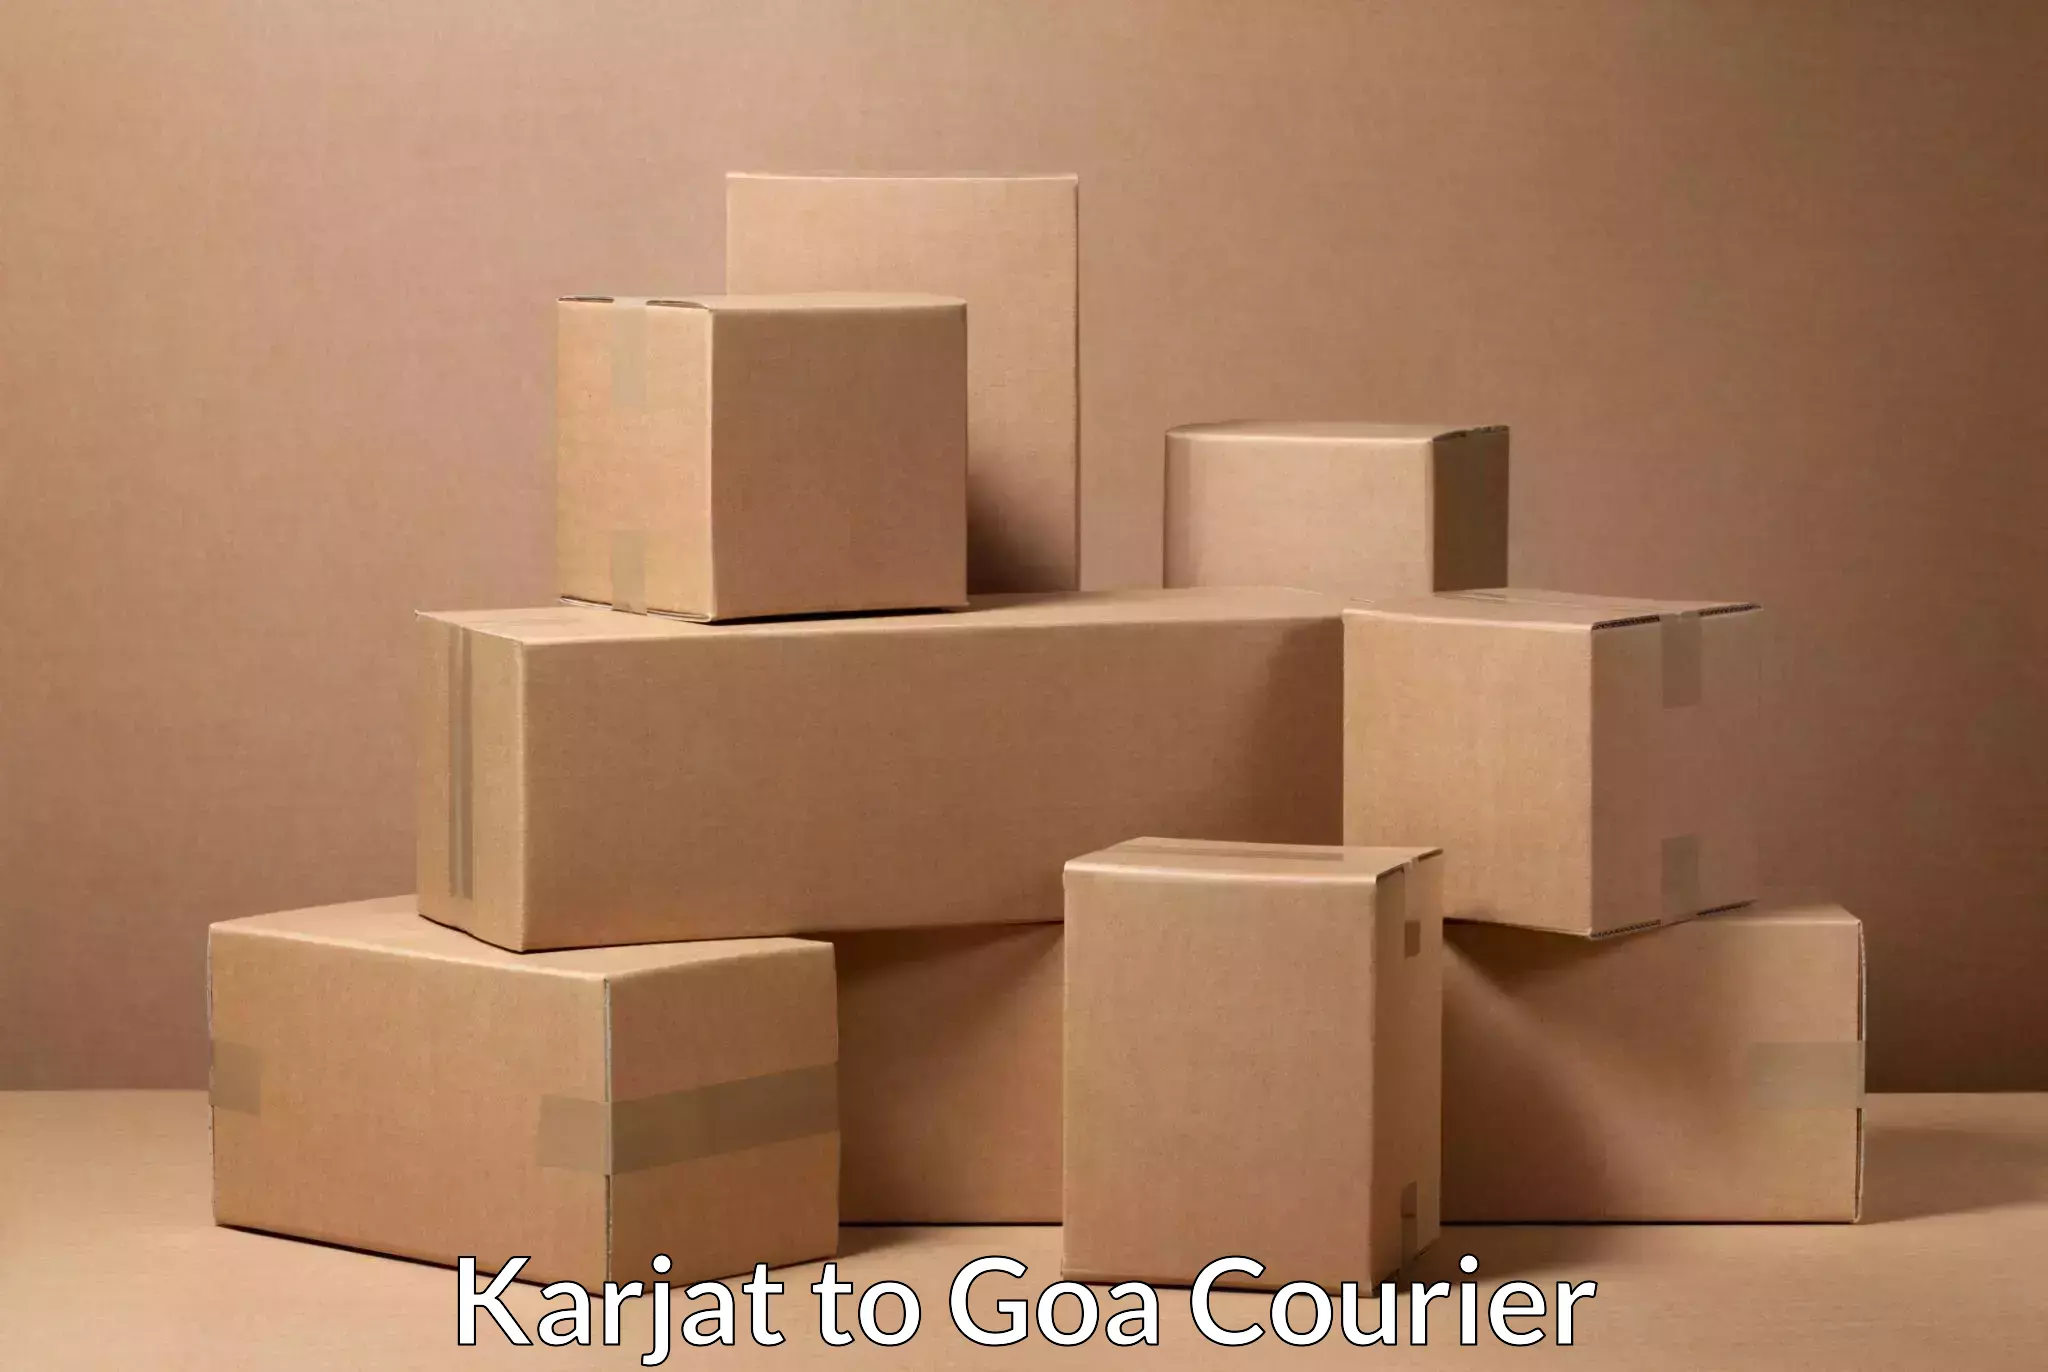 Courier service comparison Karjat to Panaji